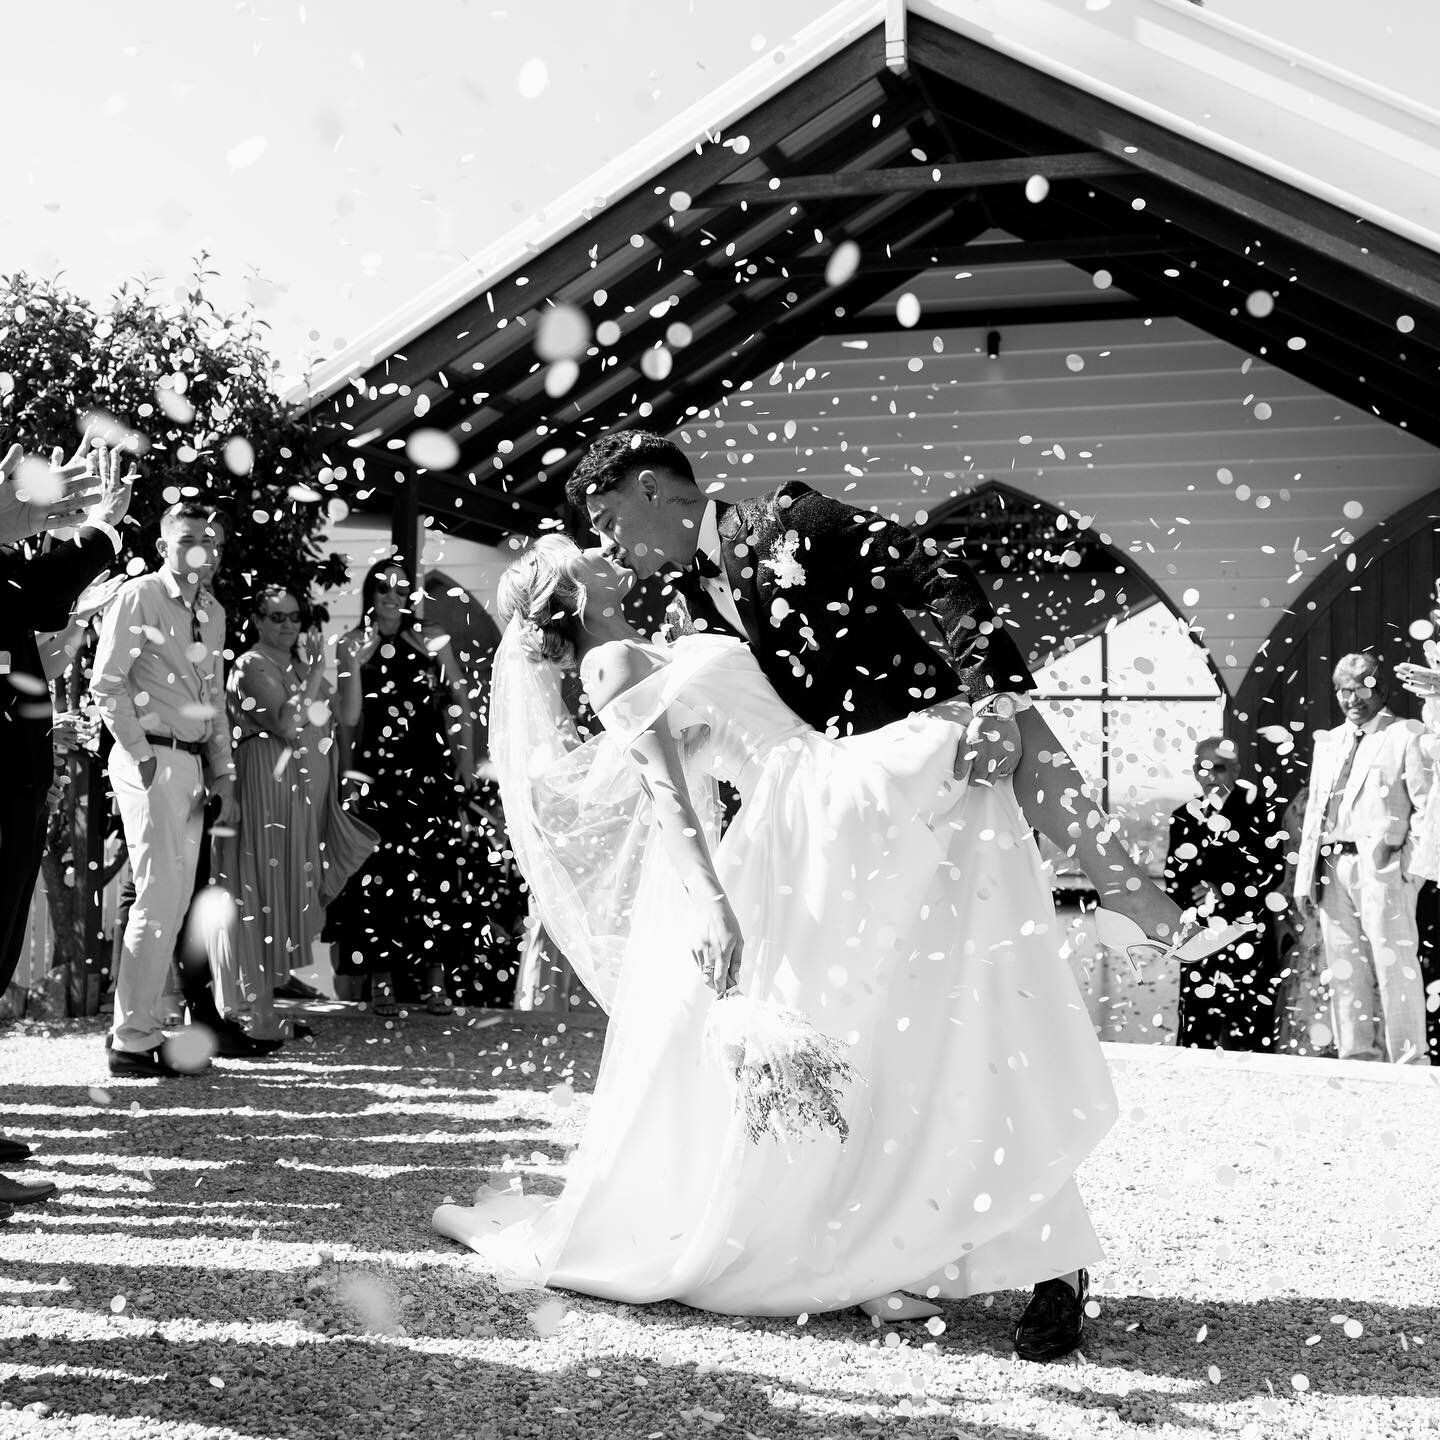 Brooke &amp; Kyale. What an epic wedding, loved capturing this one.
.
.
.
.
#summergroveestatewedding #goldcoasteeddingphotographer #ekstudio #luxweddingphotography